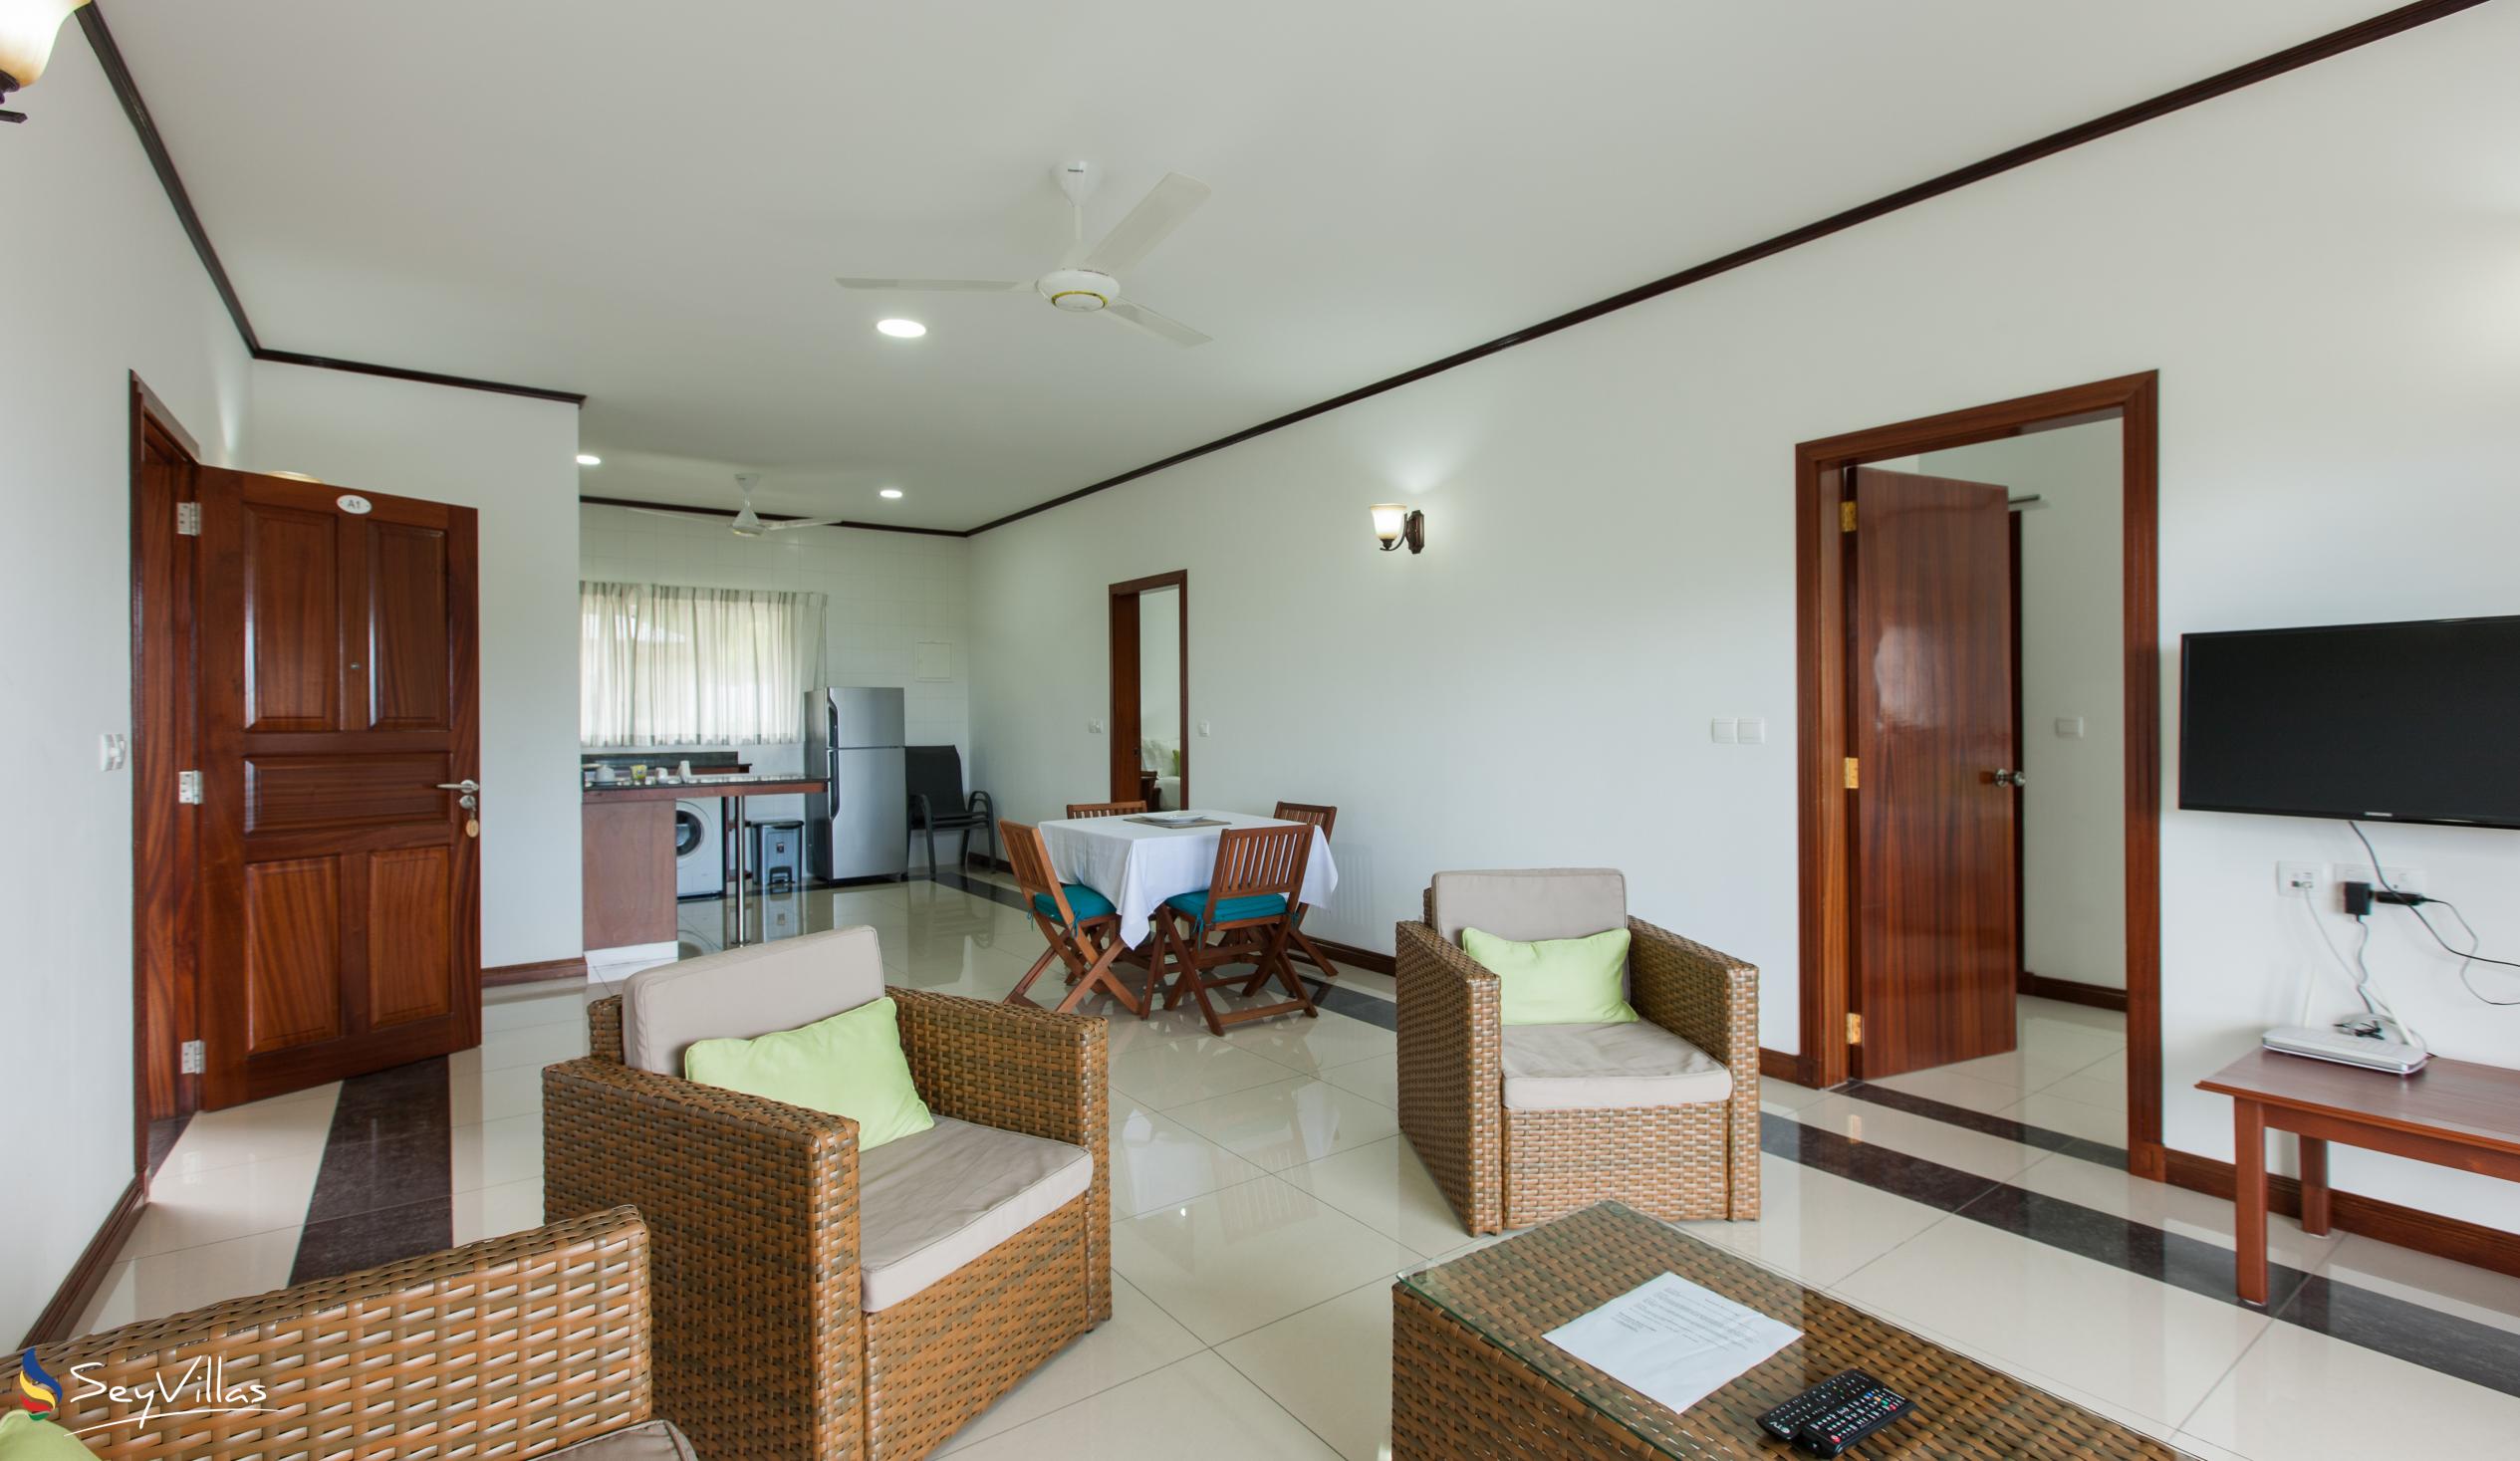 Foto 51: Bambous River Lodge - Appartement mit 2 Schlafzimmern - Mahé (Seychellen)